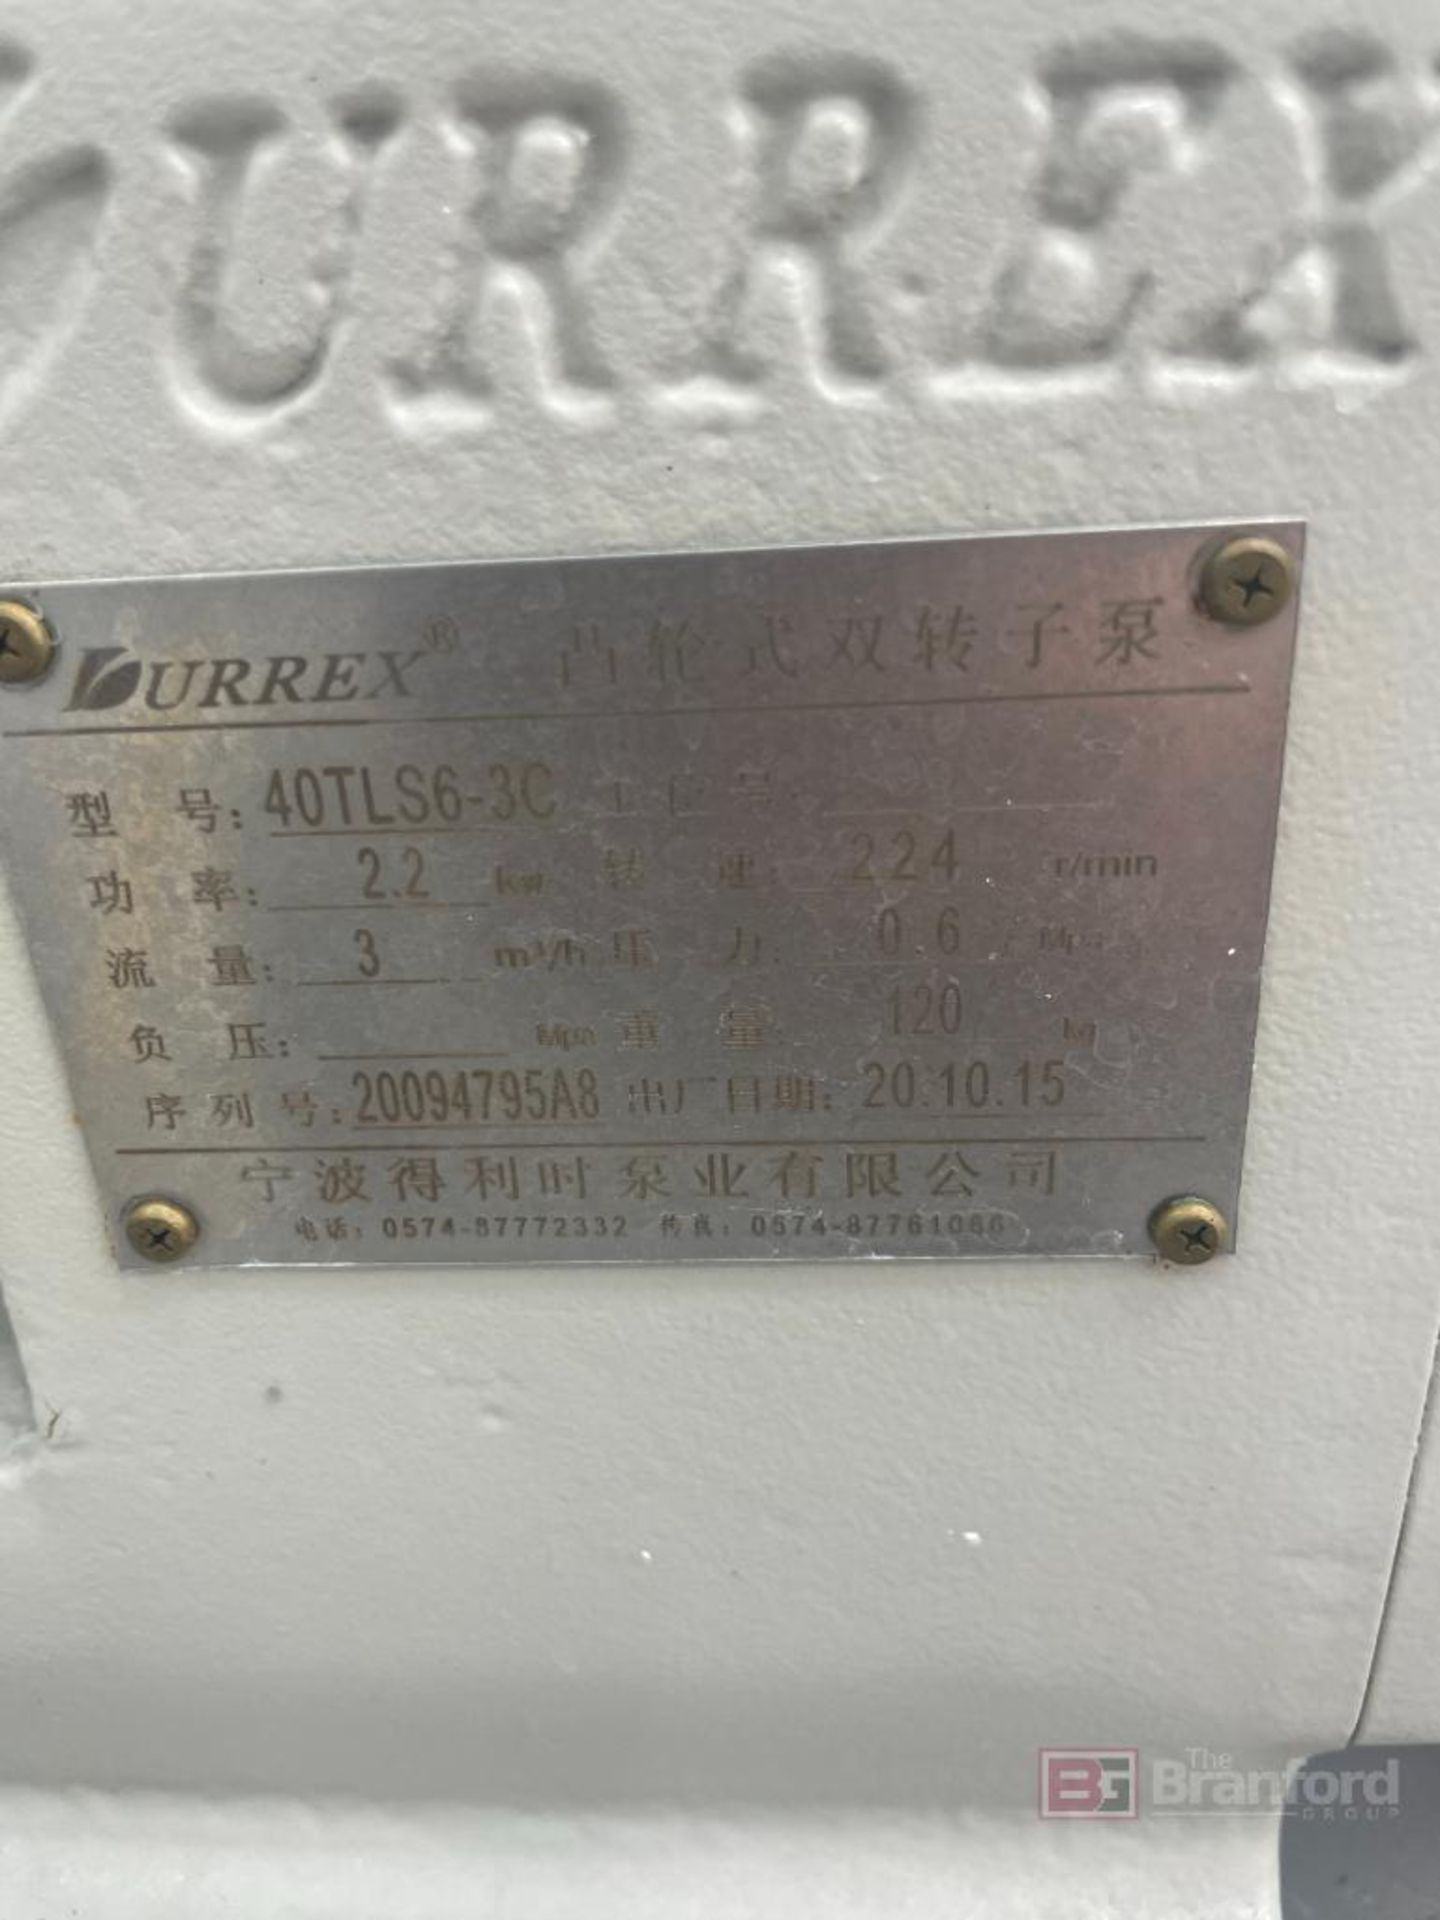 Durrex Rotary Lobe Transfer Pump - Image 3 of 3